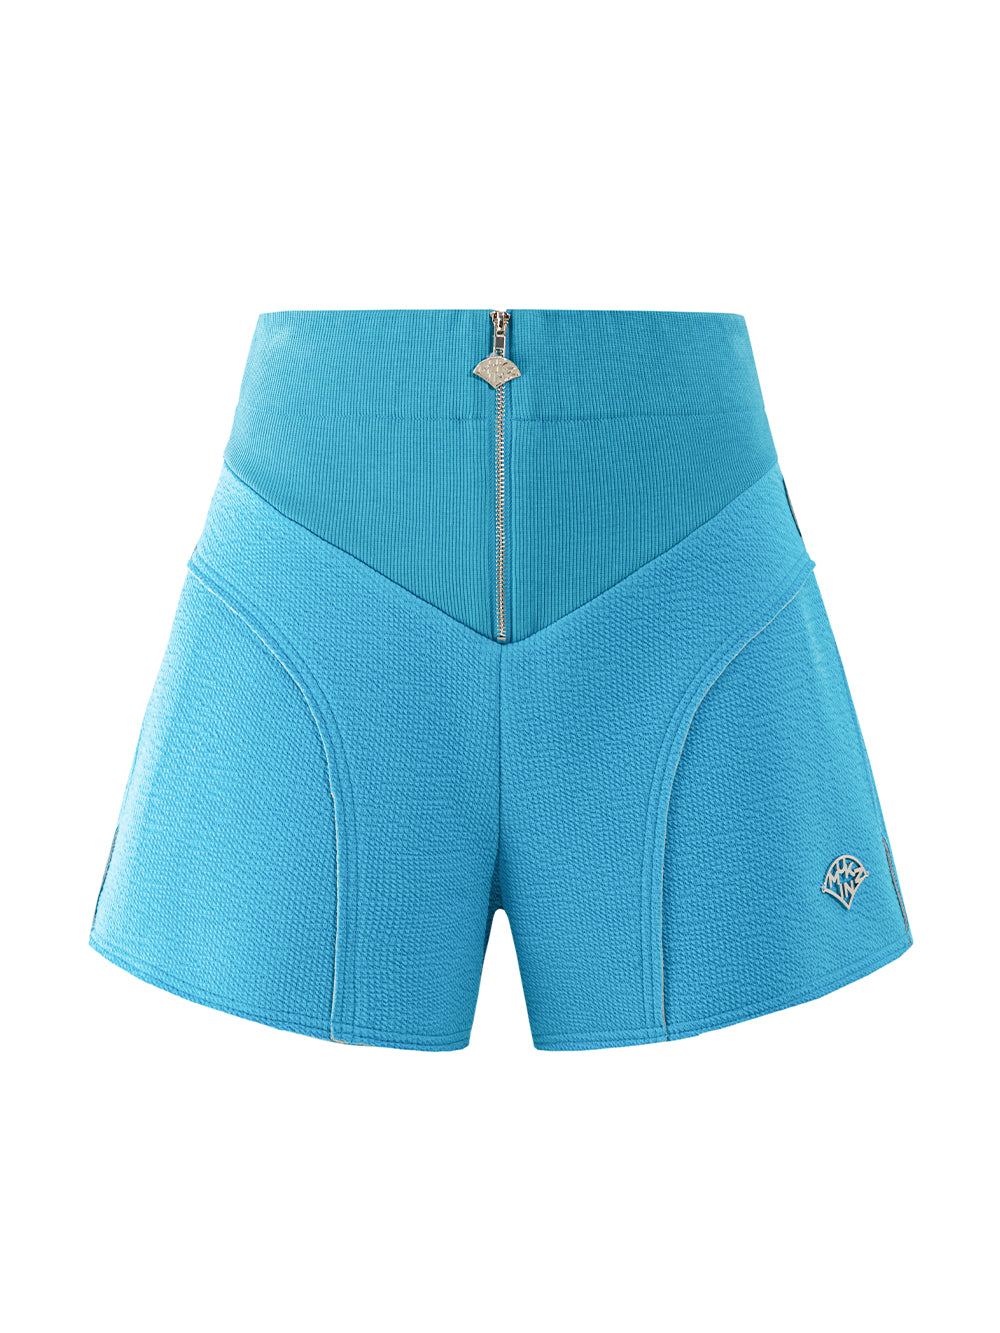 MUKZIN High Quality Sweat Absorbing Pop Original Blue Shorts